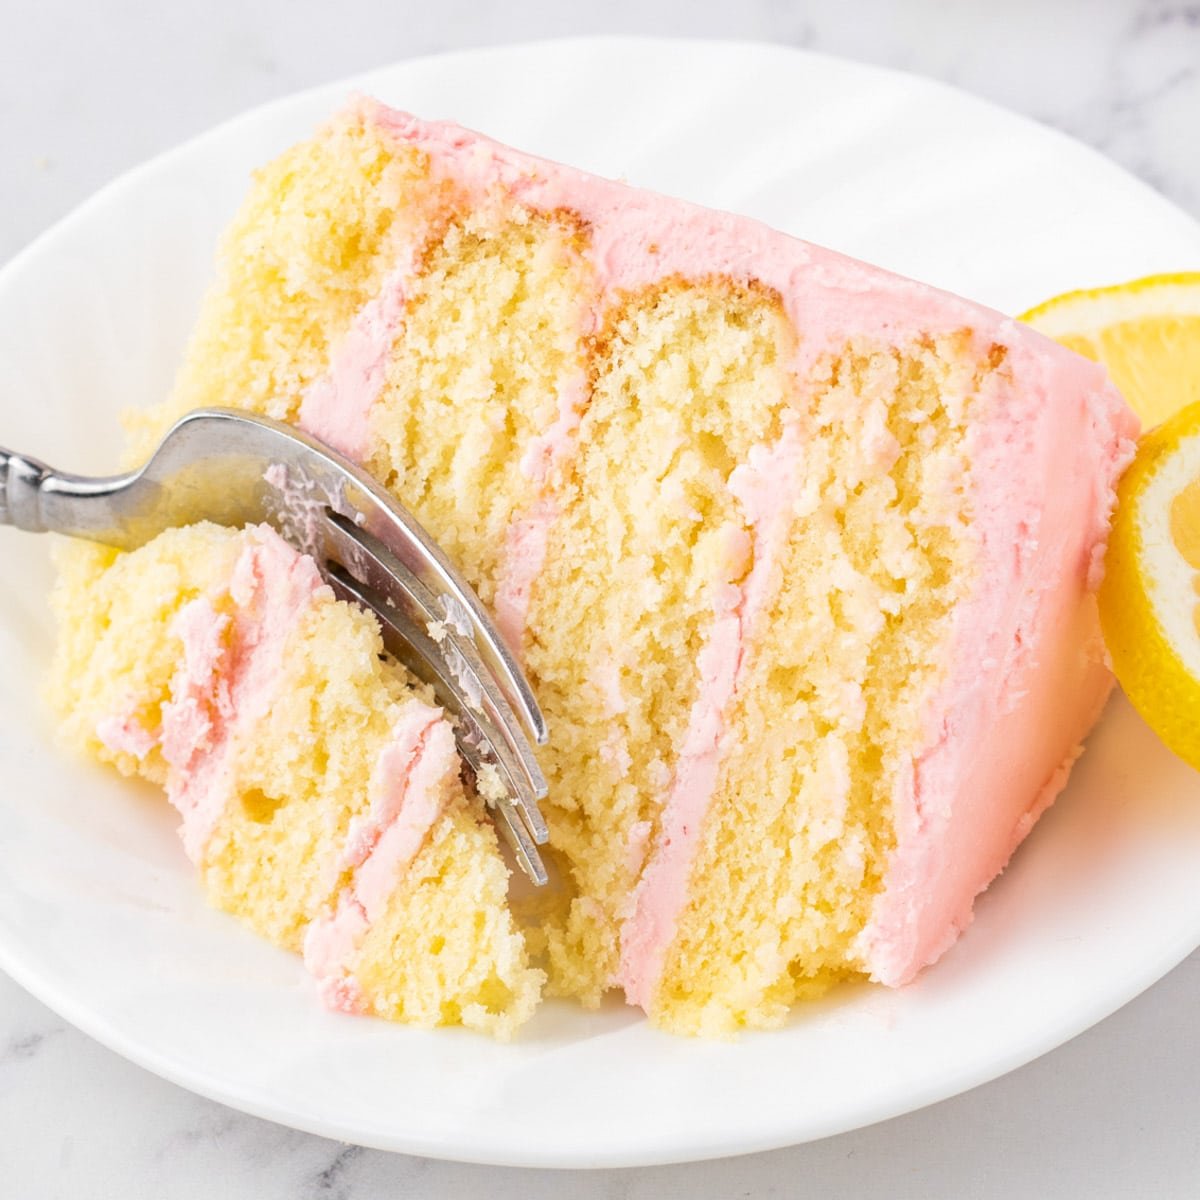 a slice of lemon raspberry cake on a plate with a fork